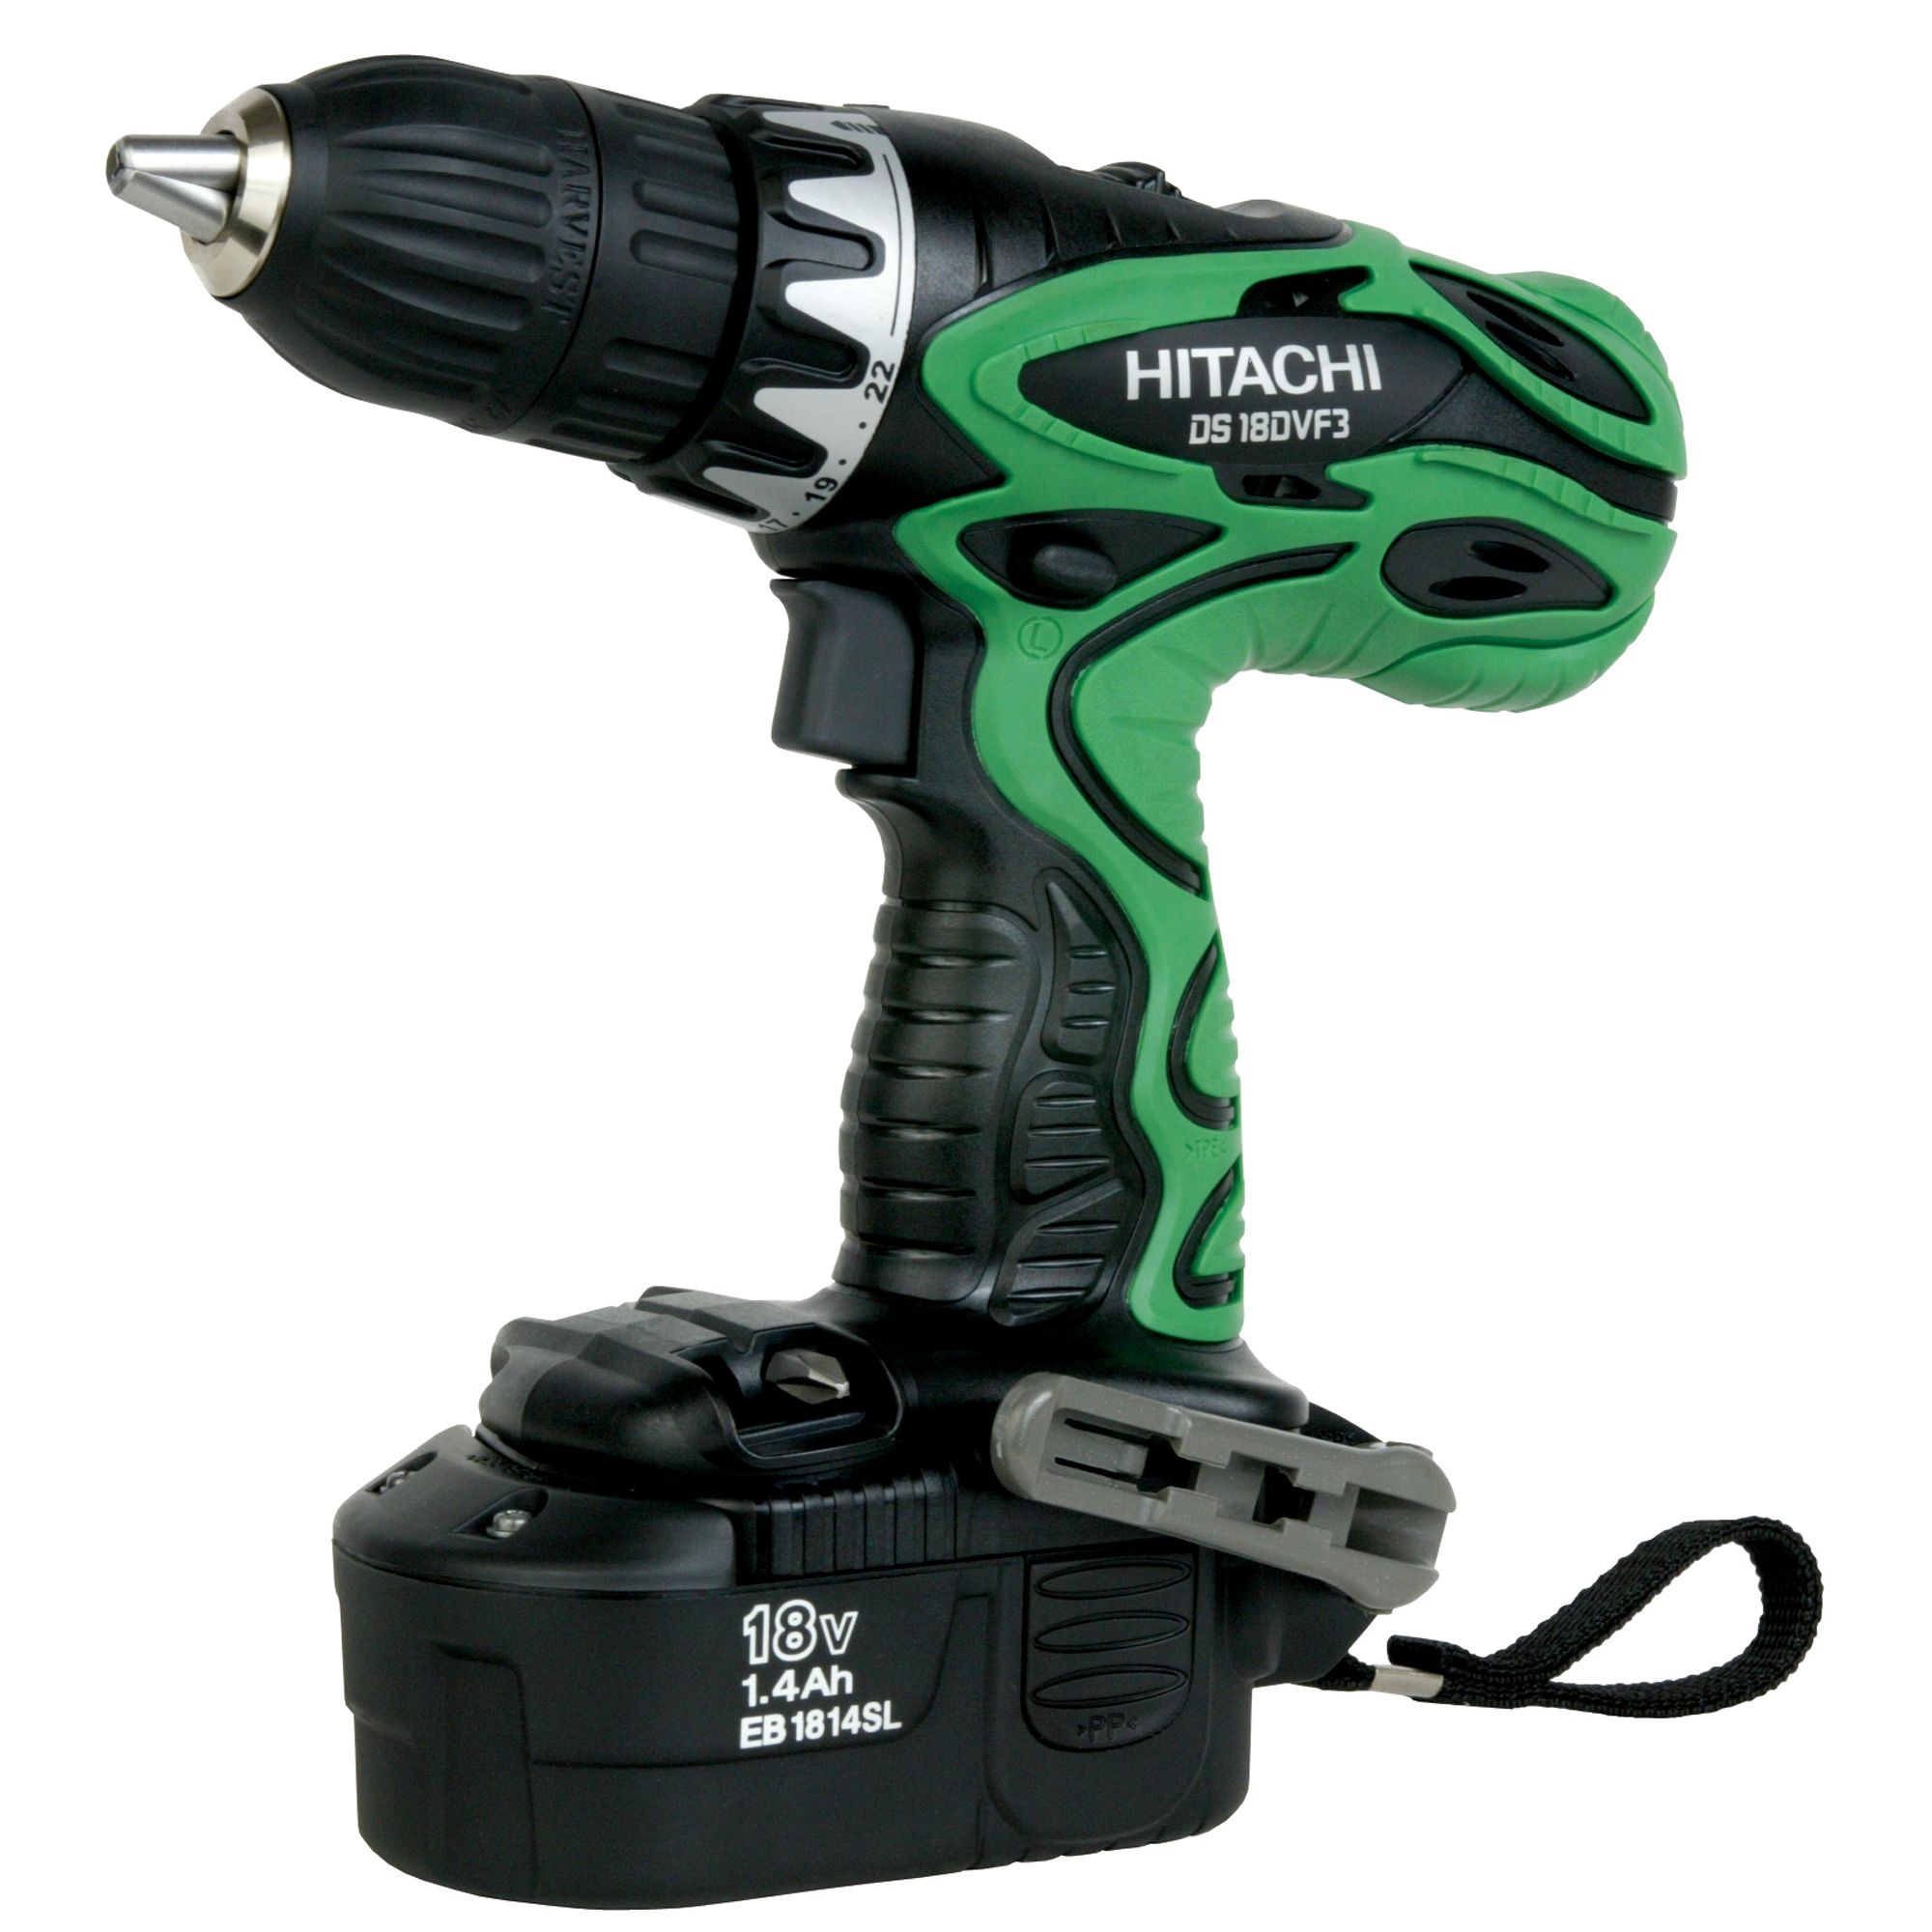 Hitachi 1/2" 18V Drill/Driver Kit with Flashlight